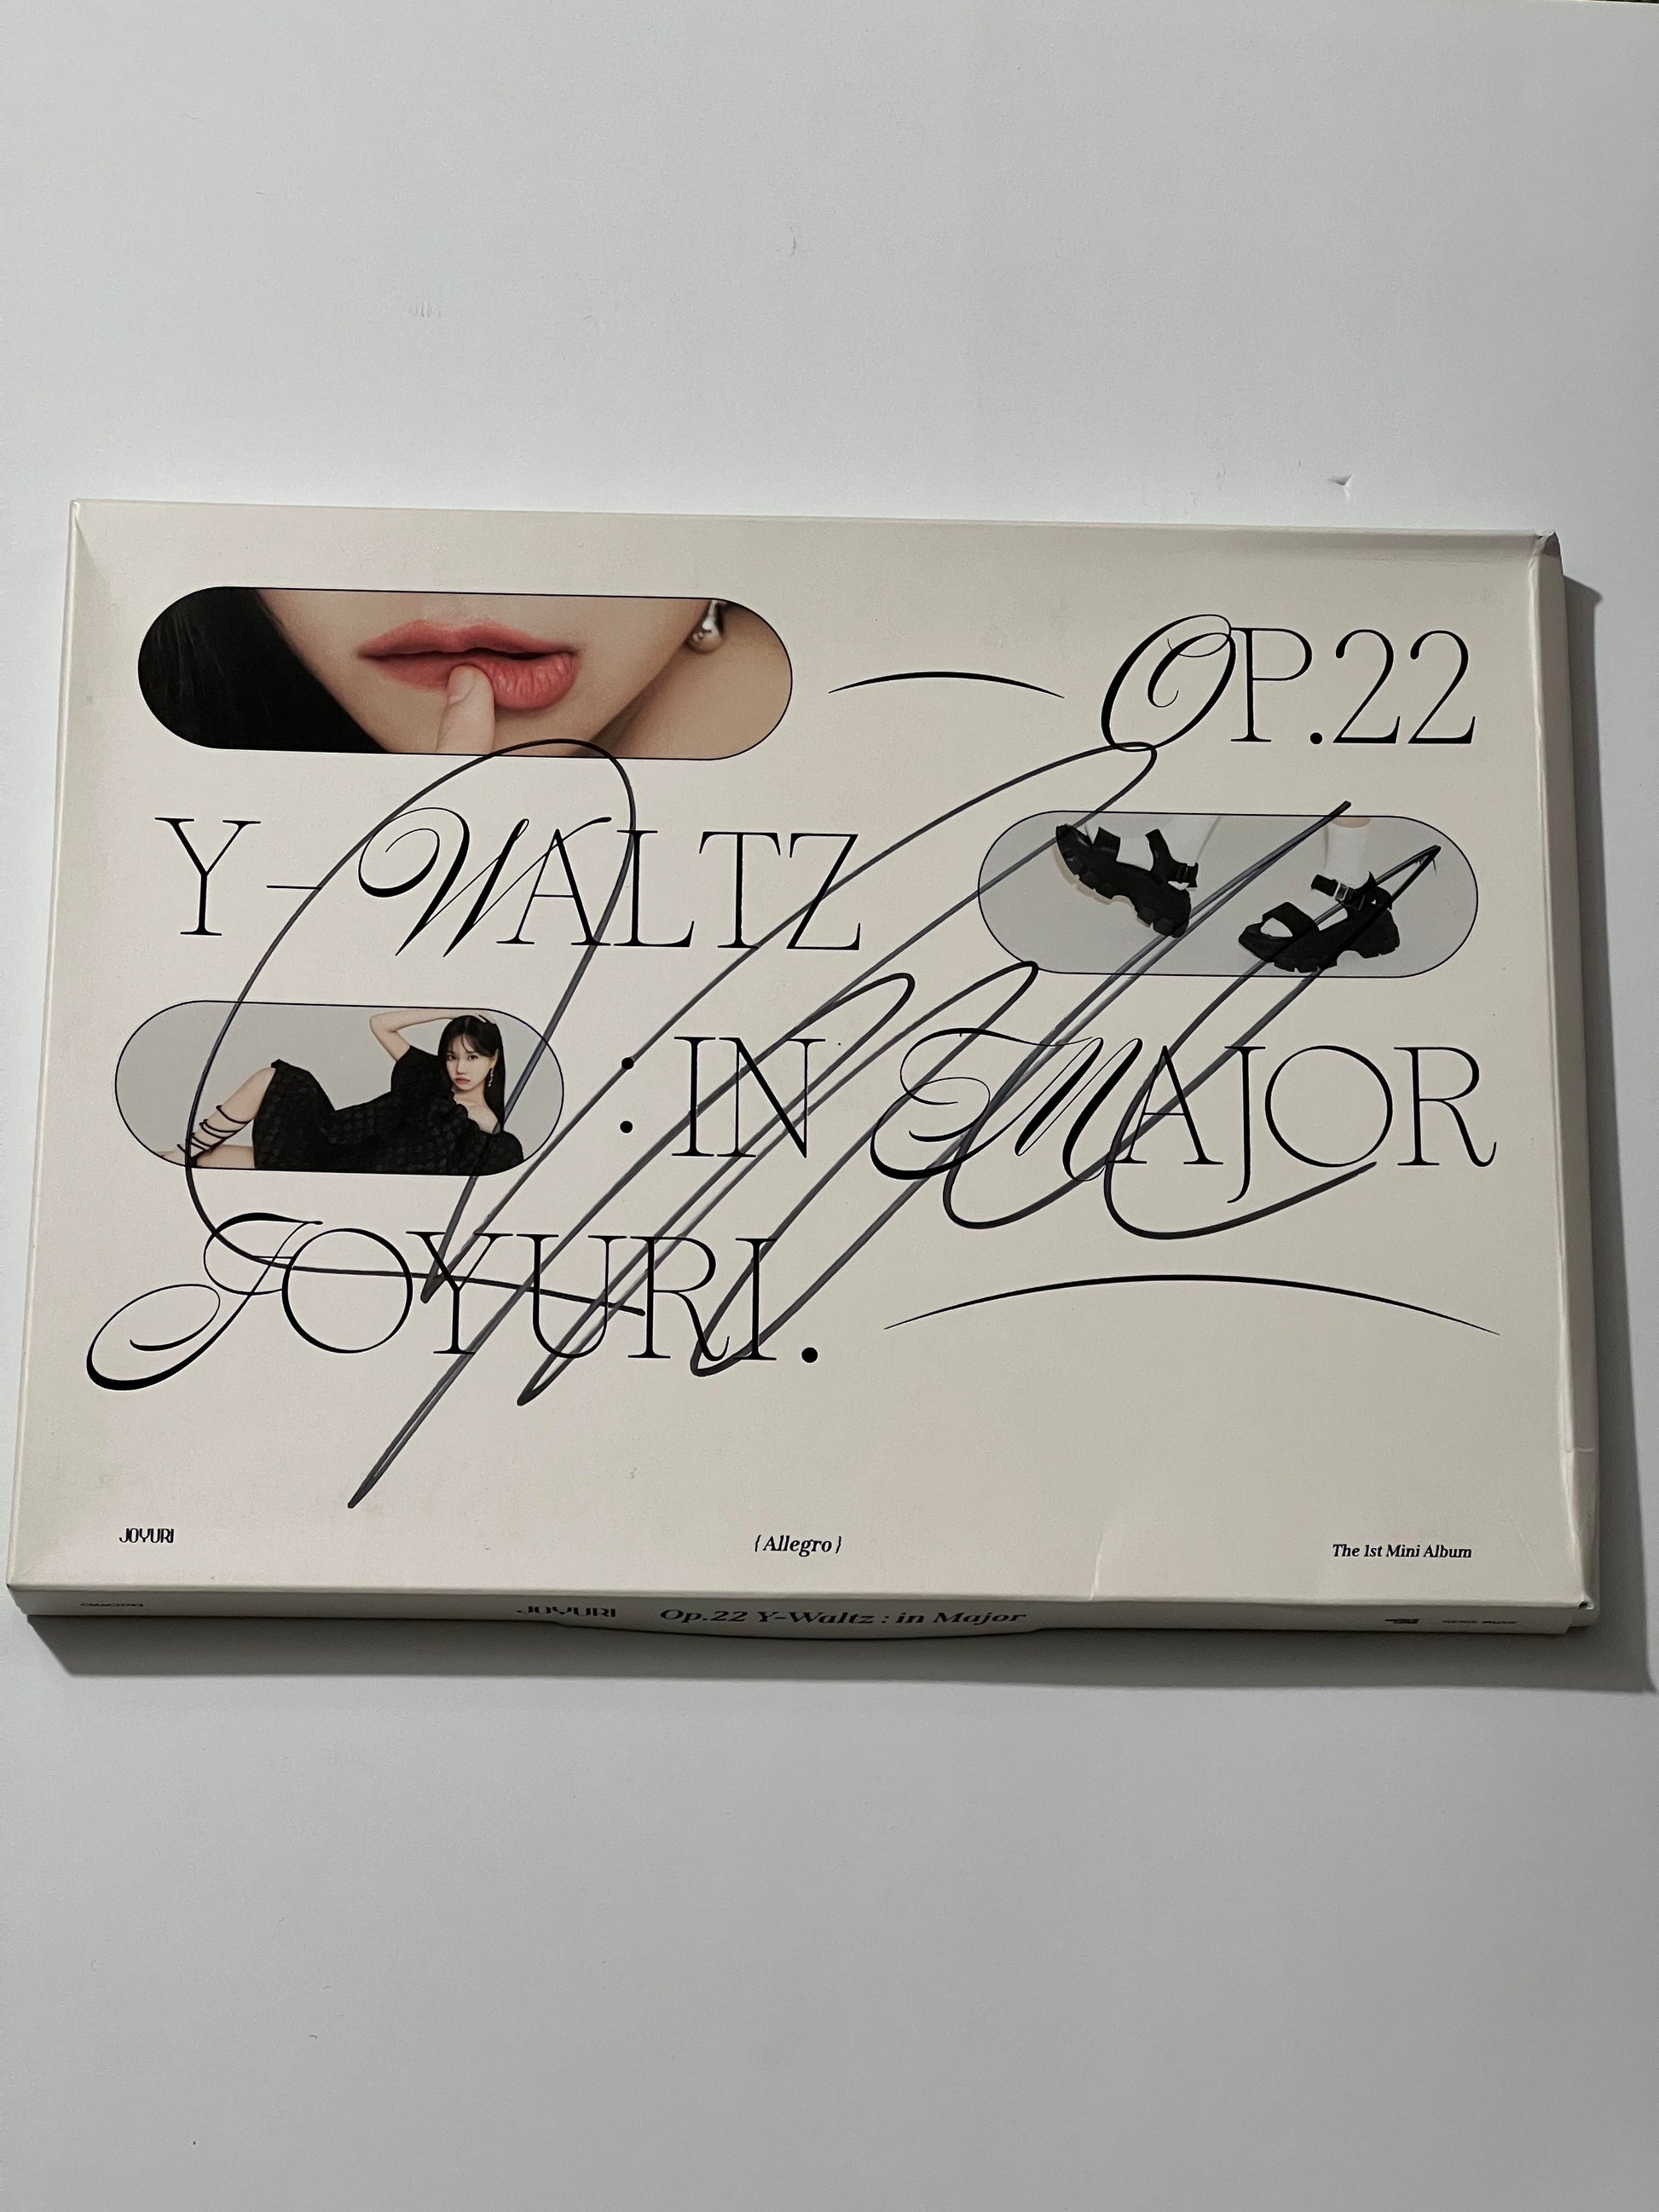 Jo Yuri Op.22 Y-Waltz : in Major (Allegro Ver) Autographed Album